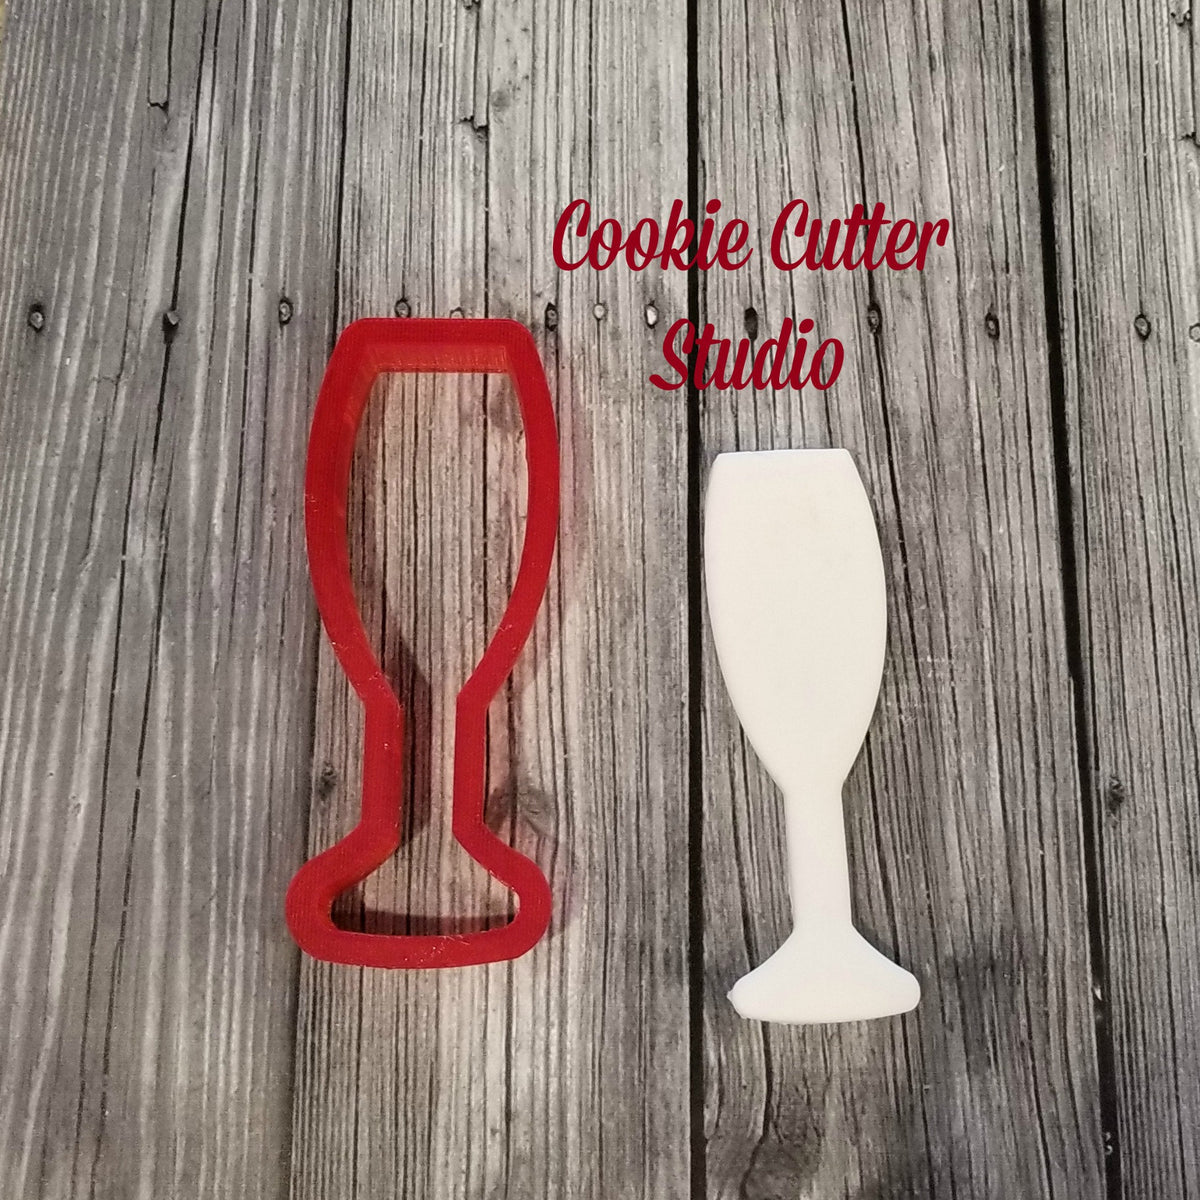 Fancy Wine Glass Cookie Cutter – Cut It Out Cutters